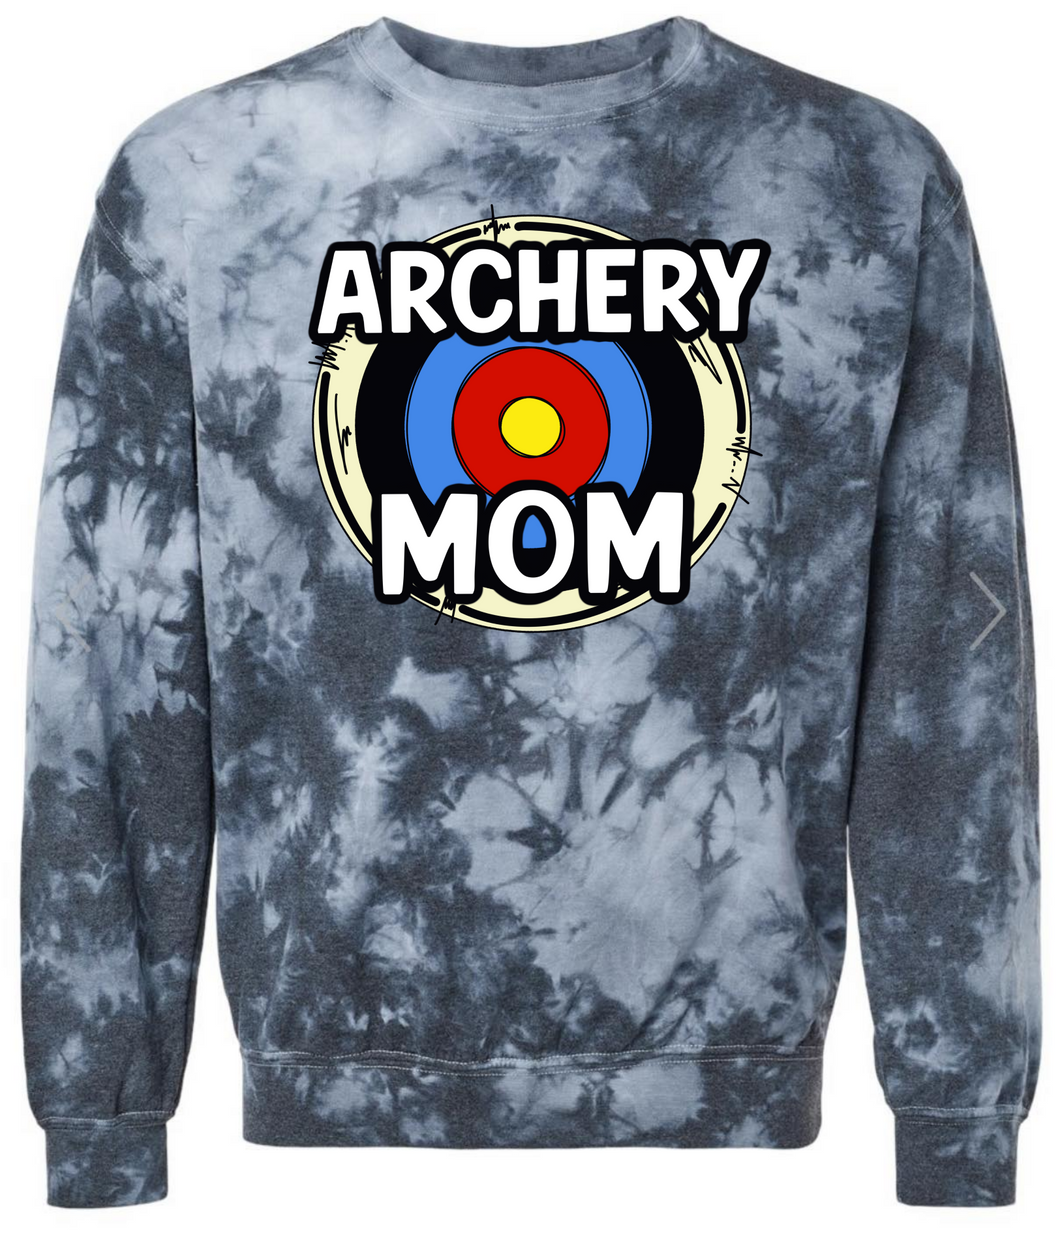 Archery Mom Tie Dye Sweatshirt